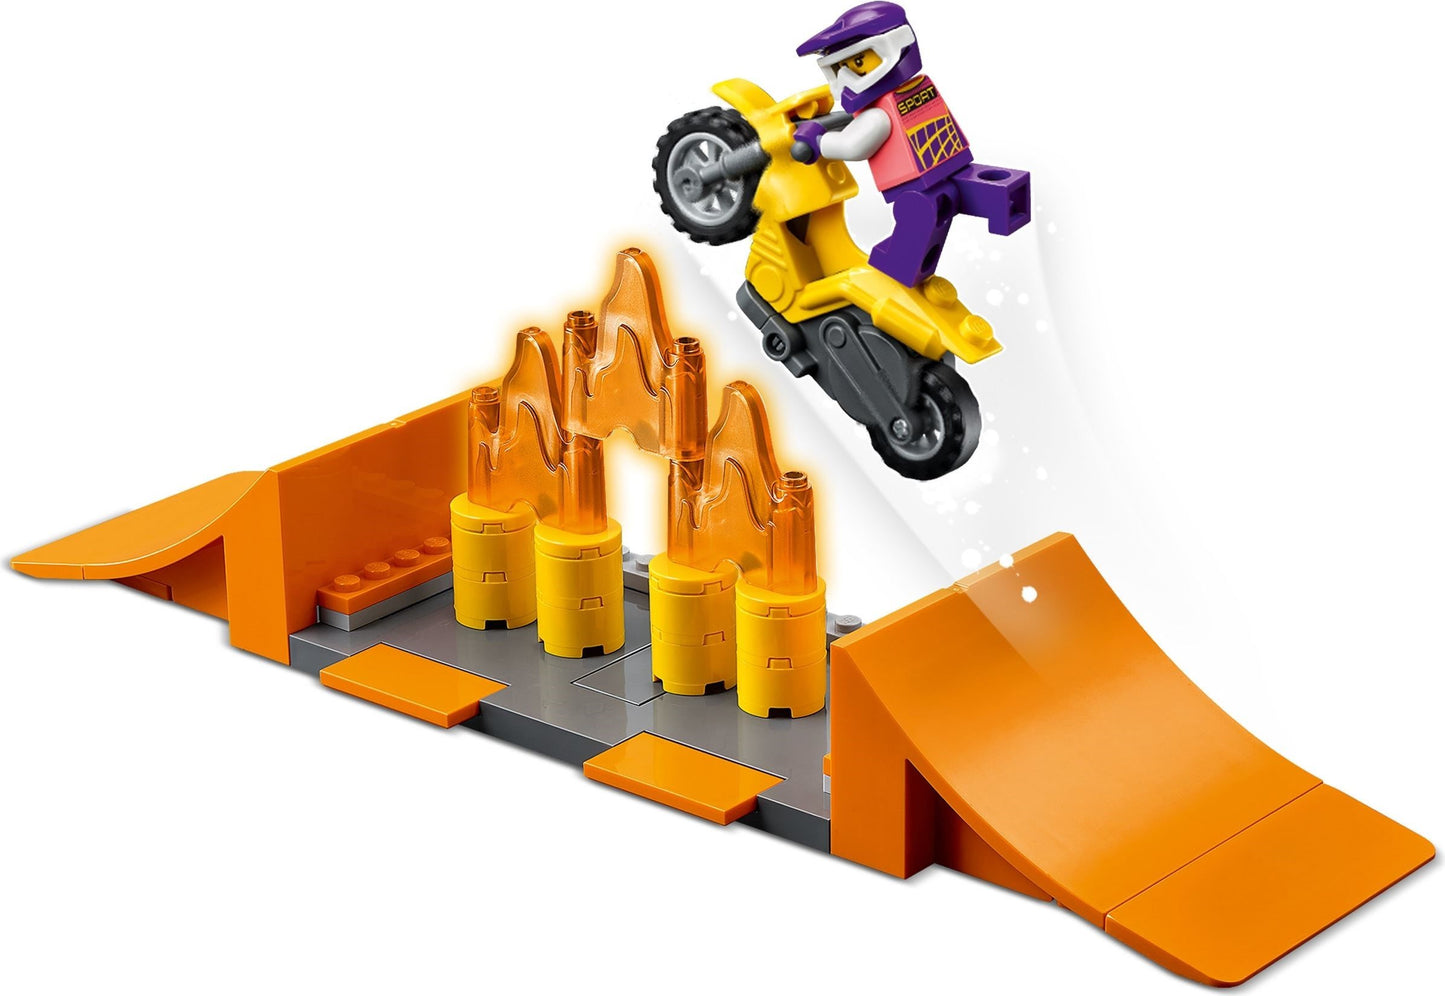 LEGO City Stuntz - Parc de cascadorii 60293, 170 piese